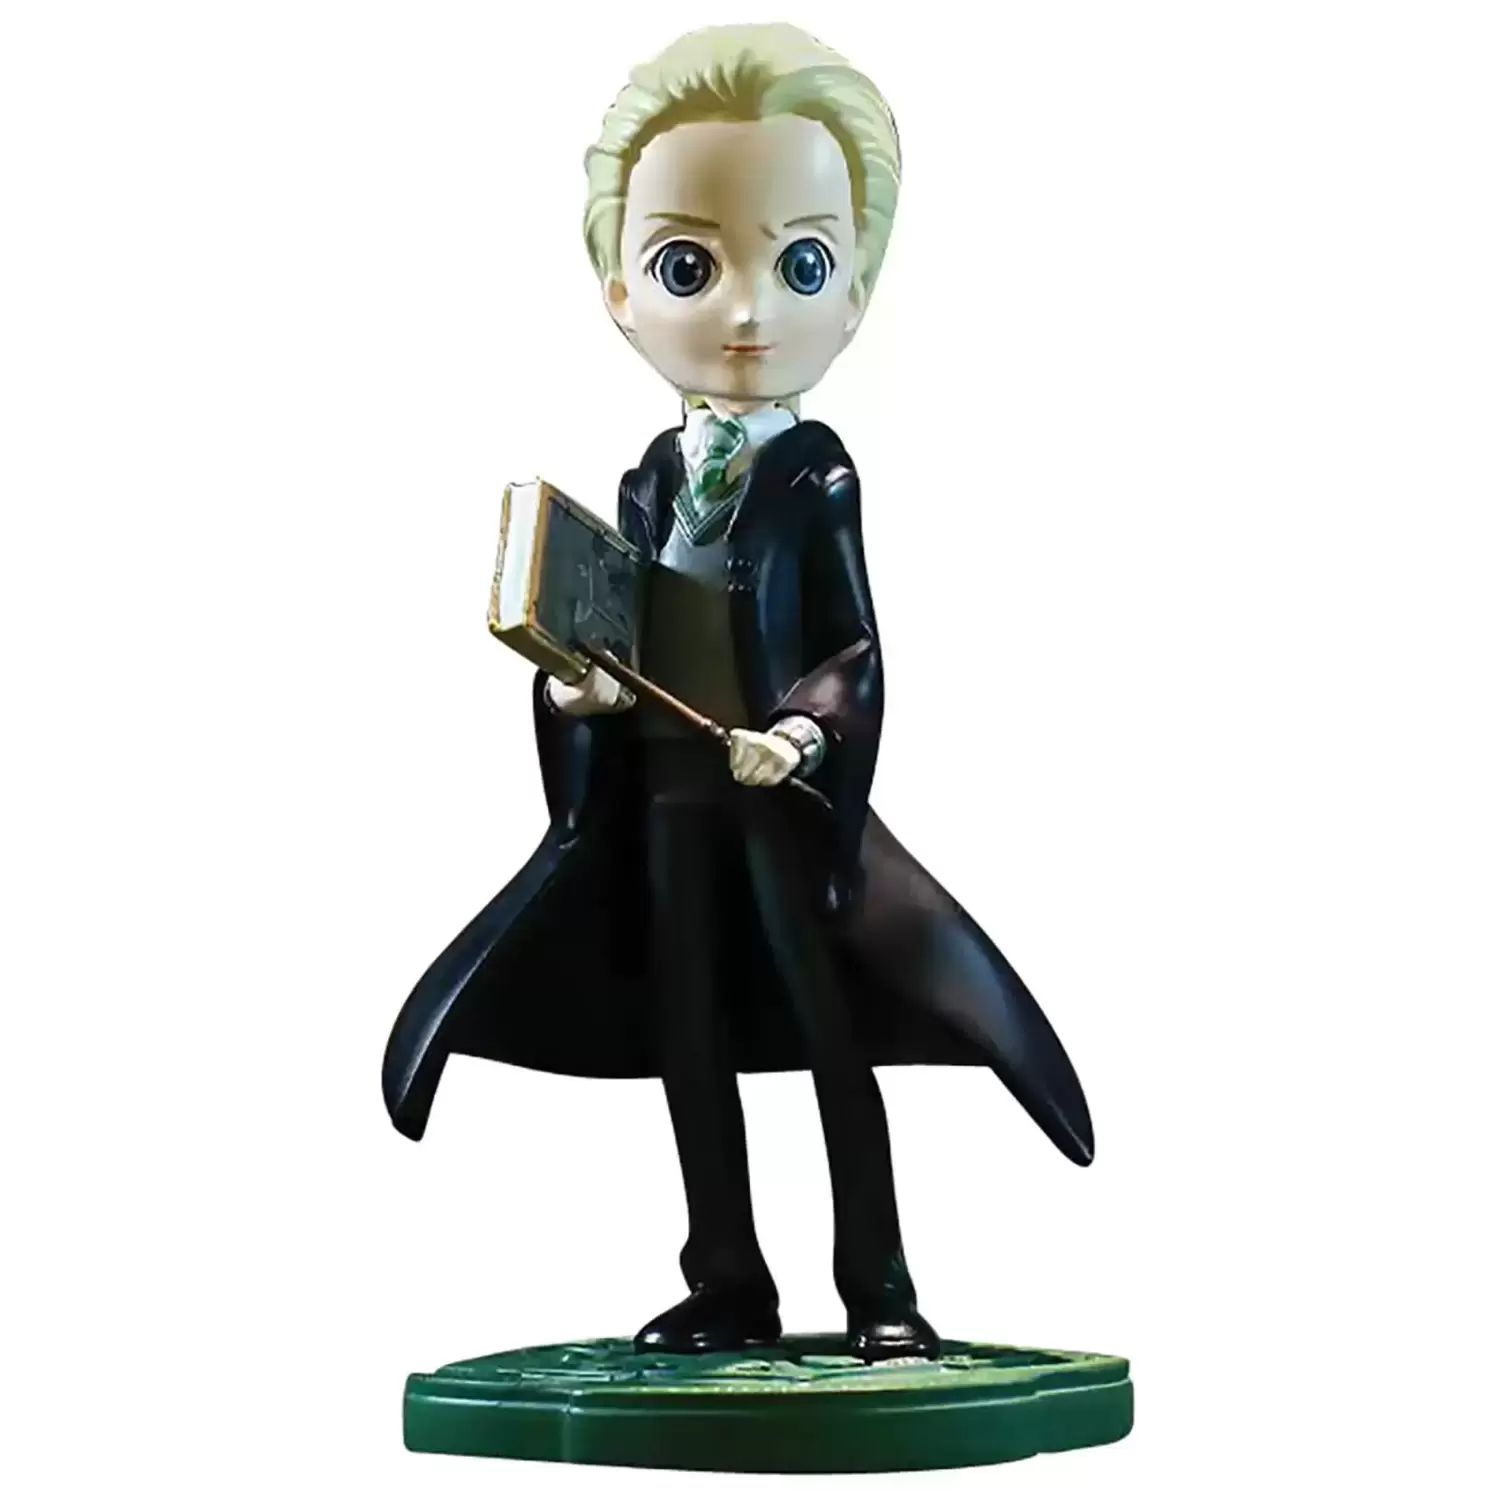 Wizarding World of Harry Potter (Enesco) - Draco Malfoy Figurine